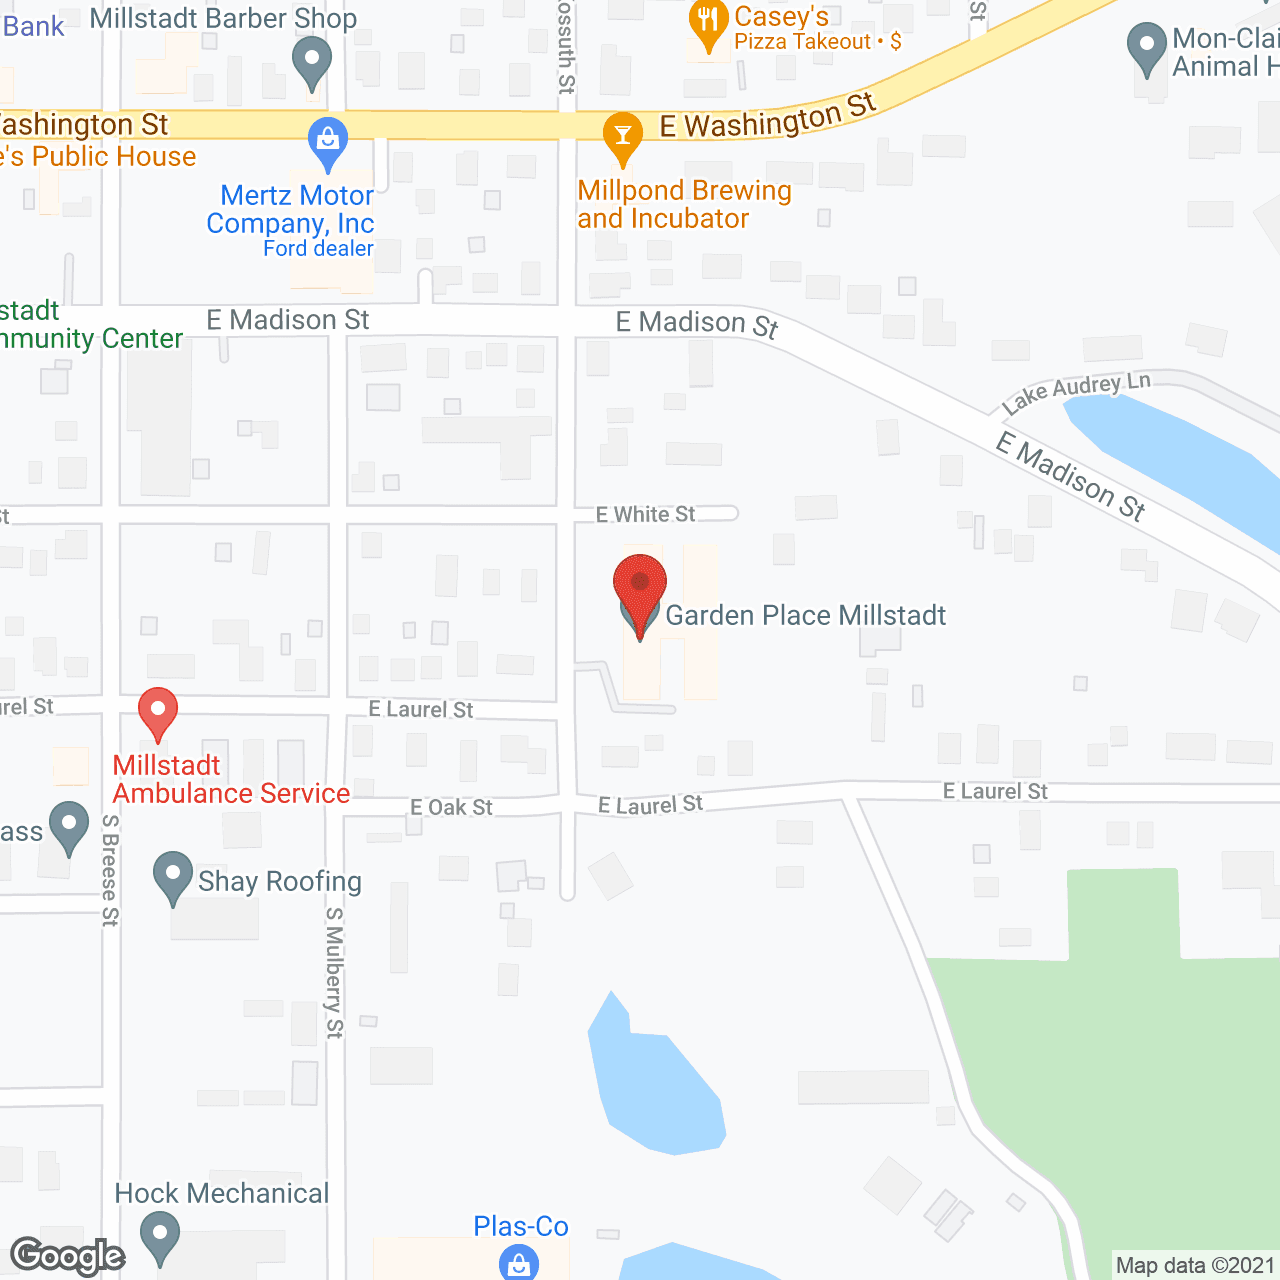 Garden Place of Millstadt in google map